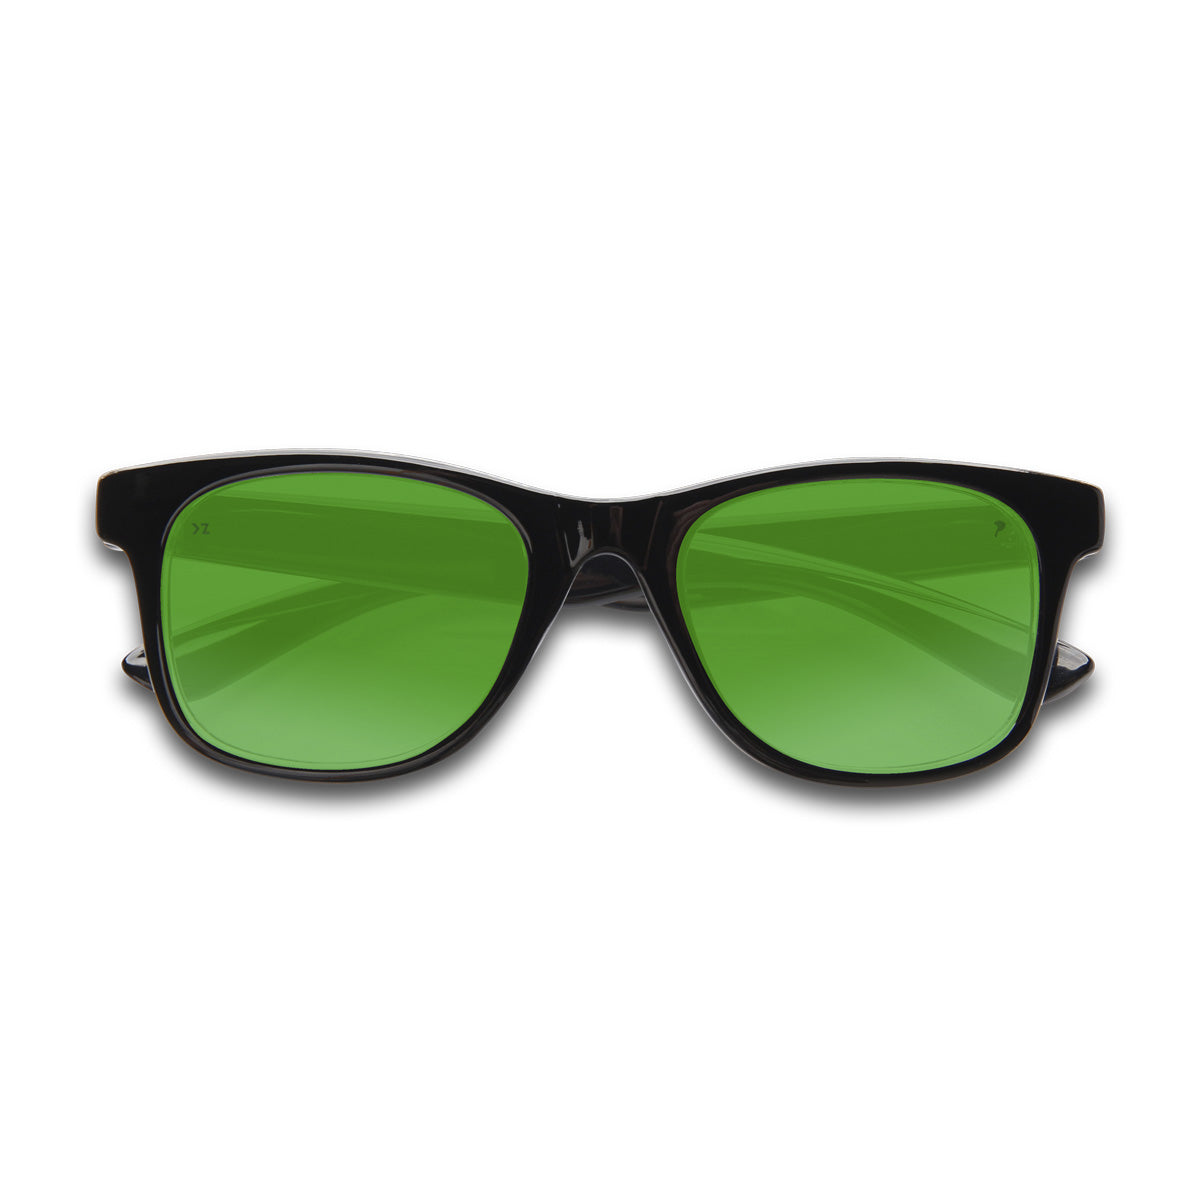 Kidz - Floating Sunglasses KZ Black / Green Mirror